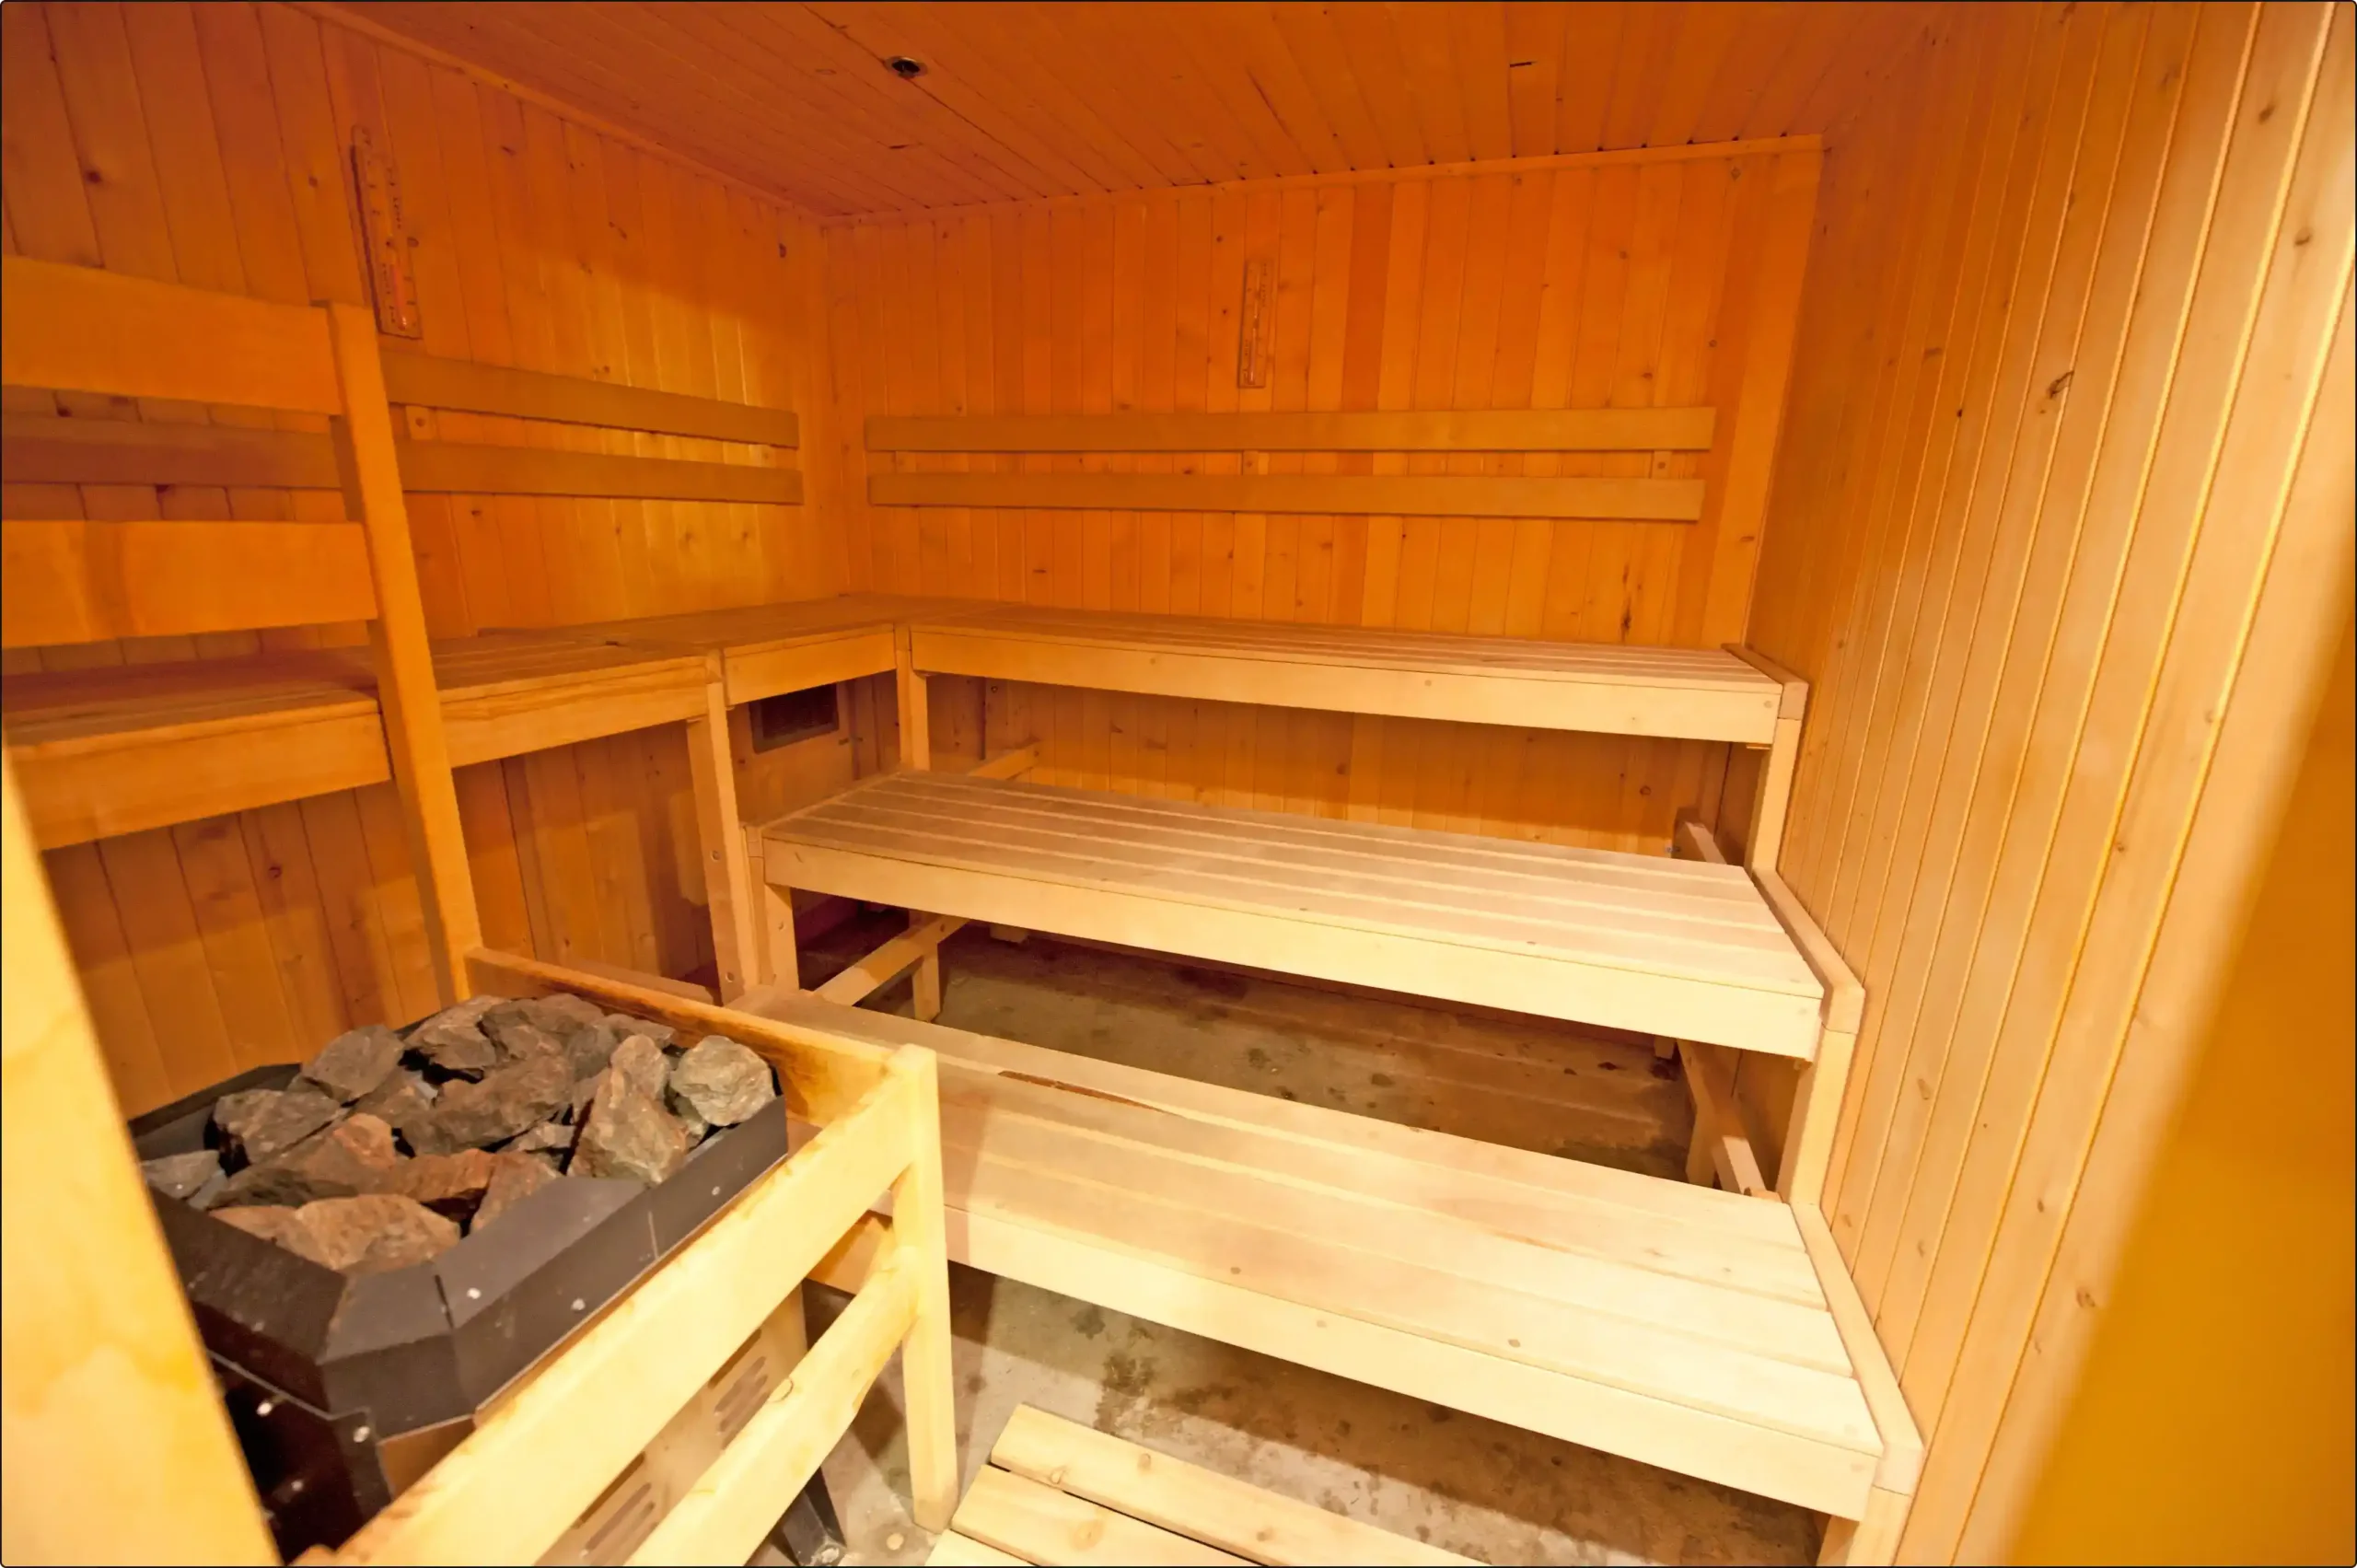 Medium sized sauna with hot rocks